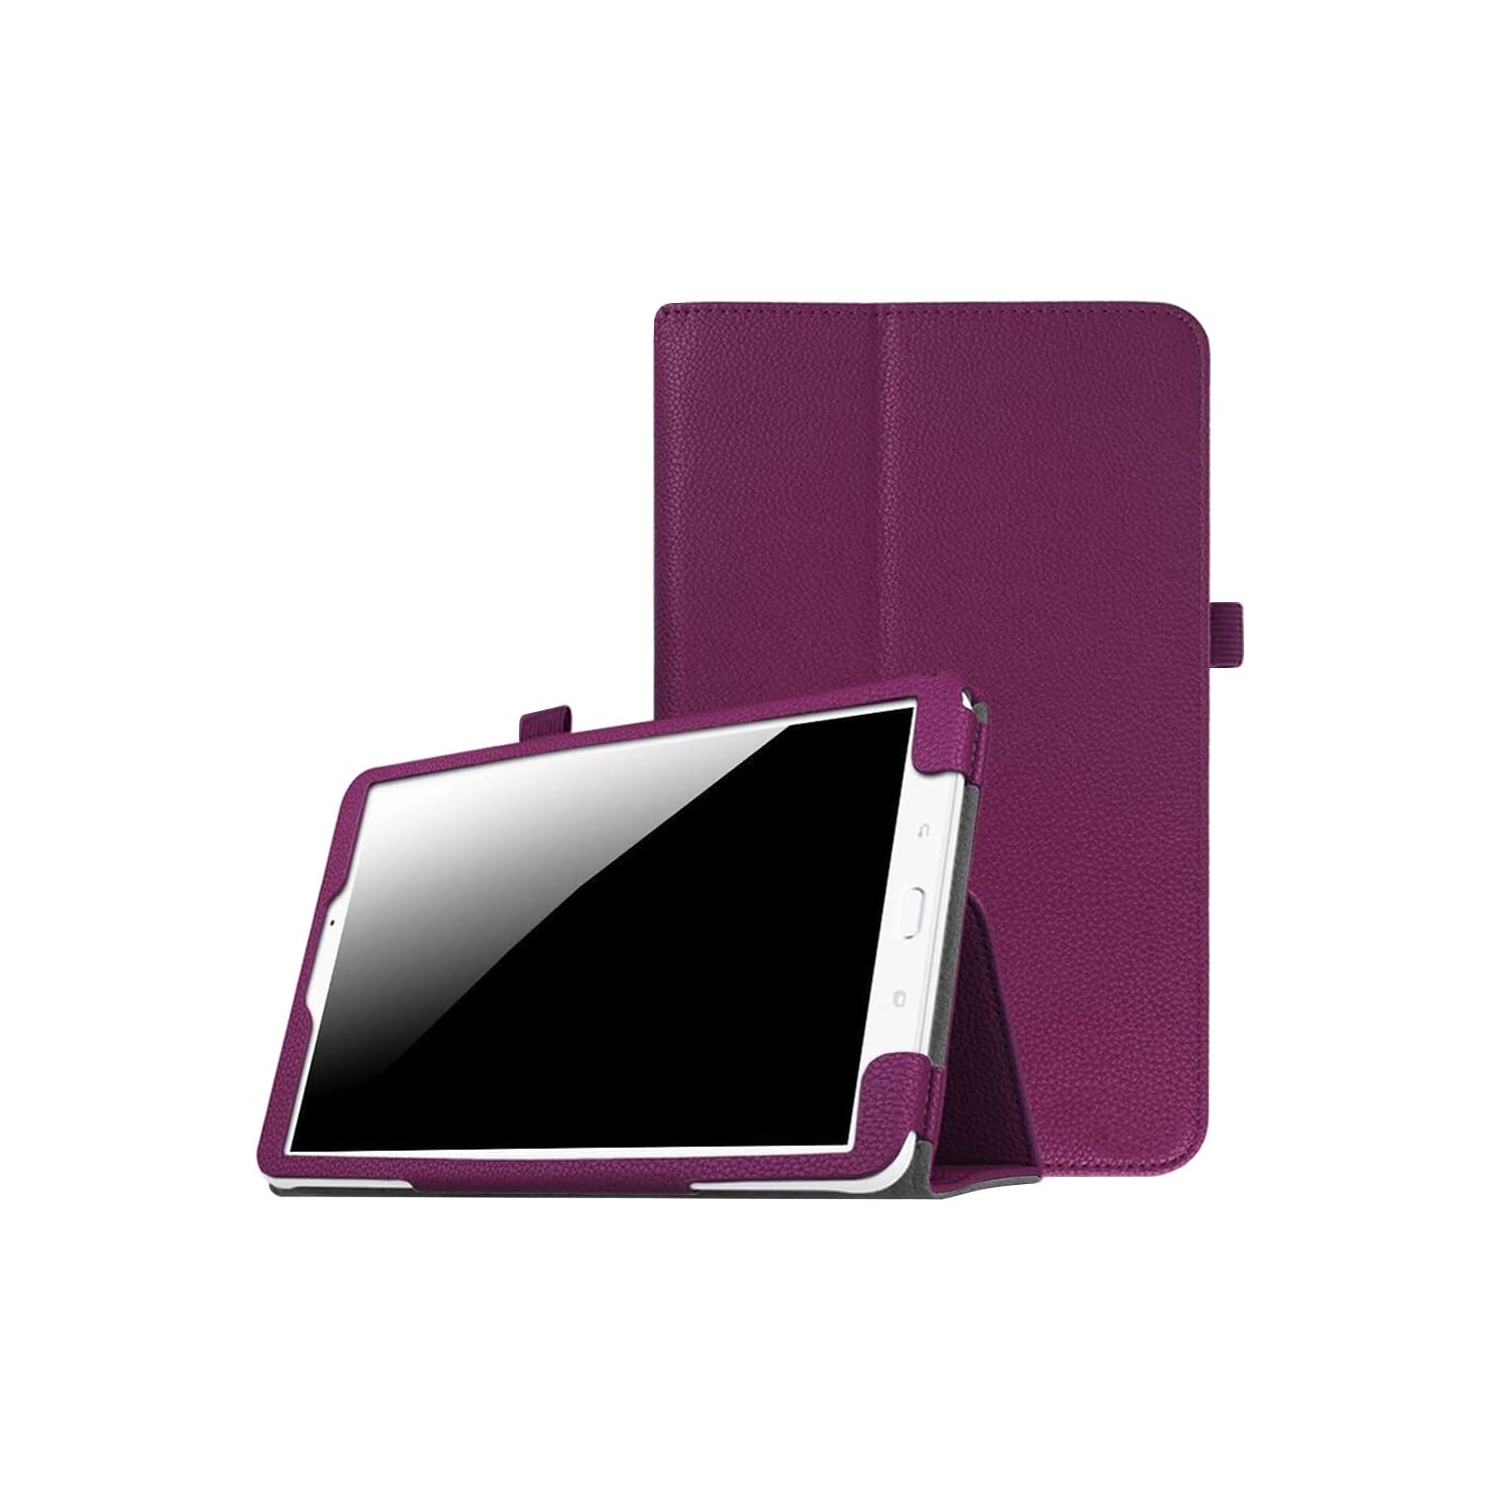 K Slim Case for Samsung Galaxy Tab E 9.6'', Lightweight Stand Cover for Samsung Galaxy Tab E 9.6 Inch Tablet 2015 Released Model SM-T560 T561 T565 and SM-T567V, Purple